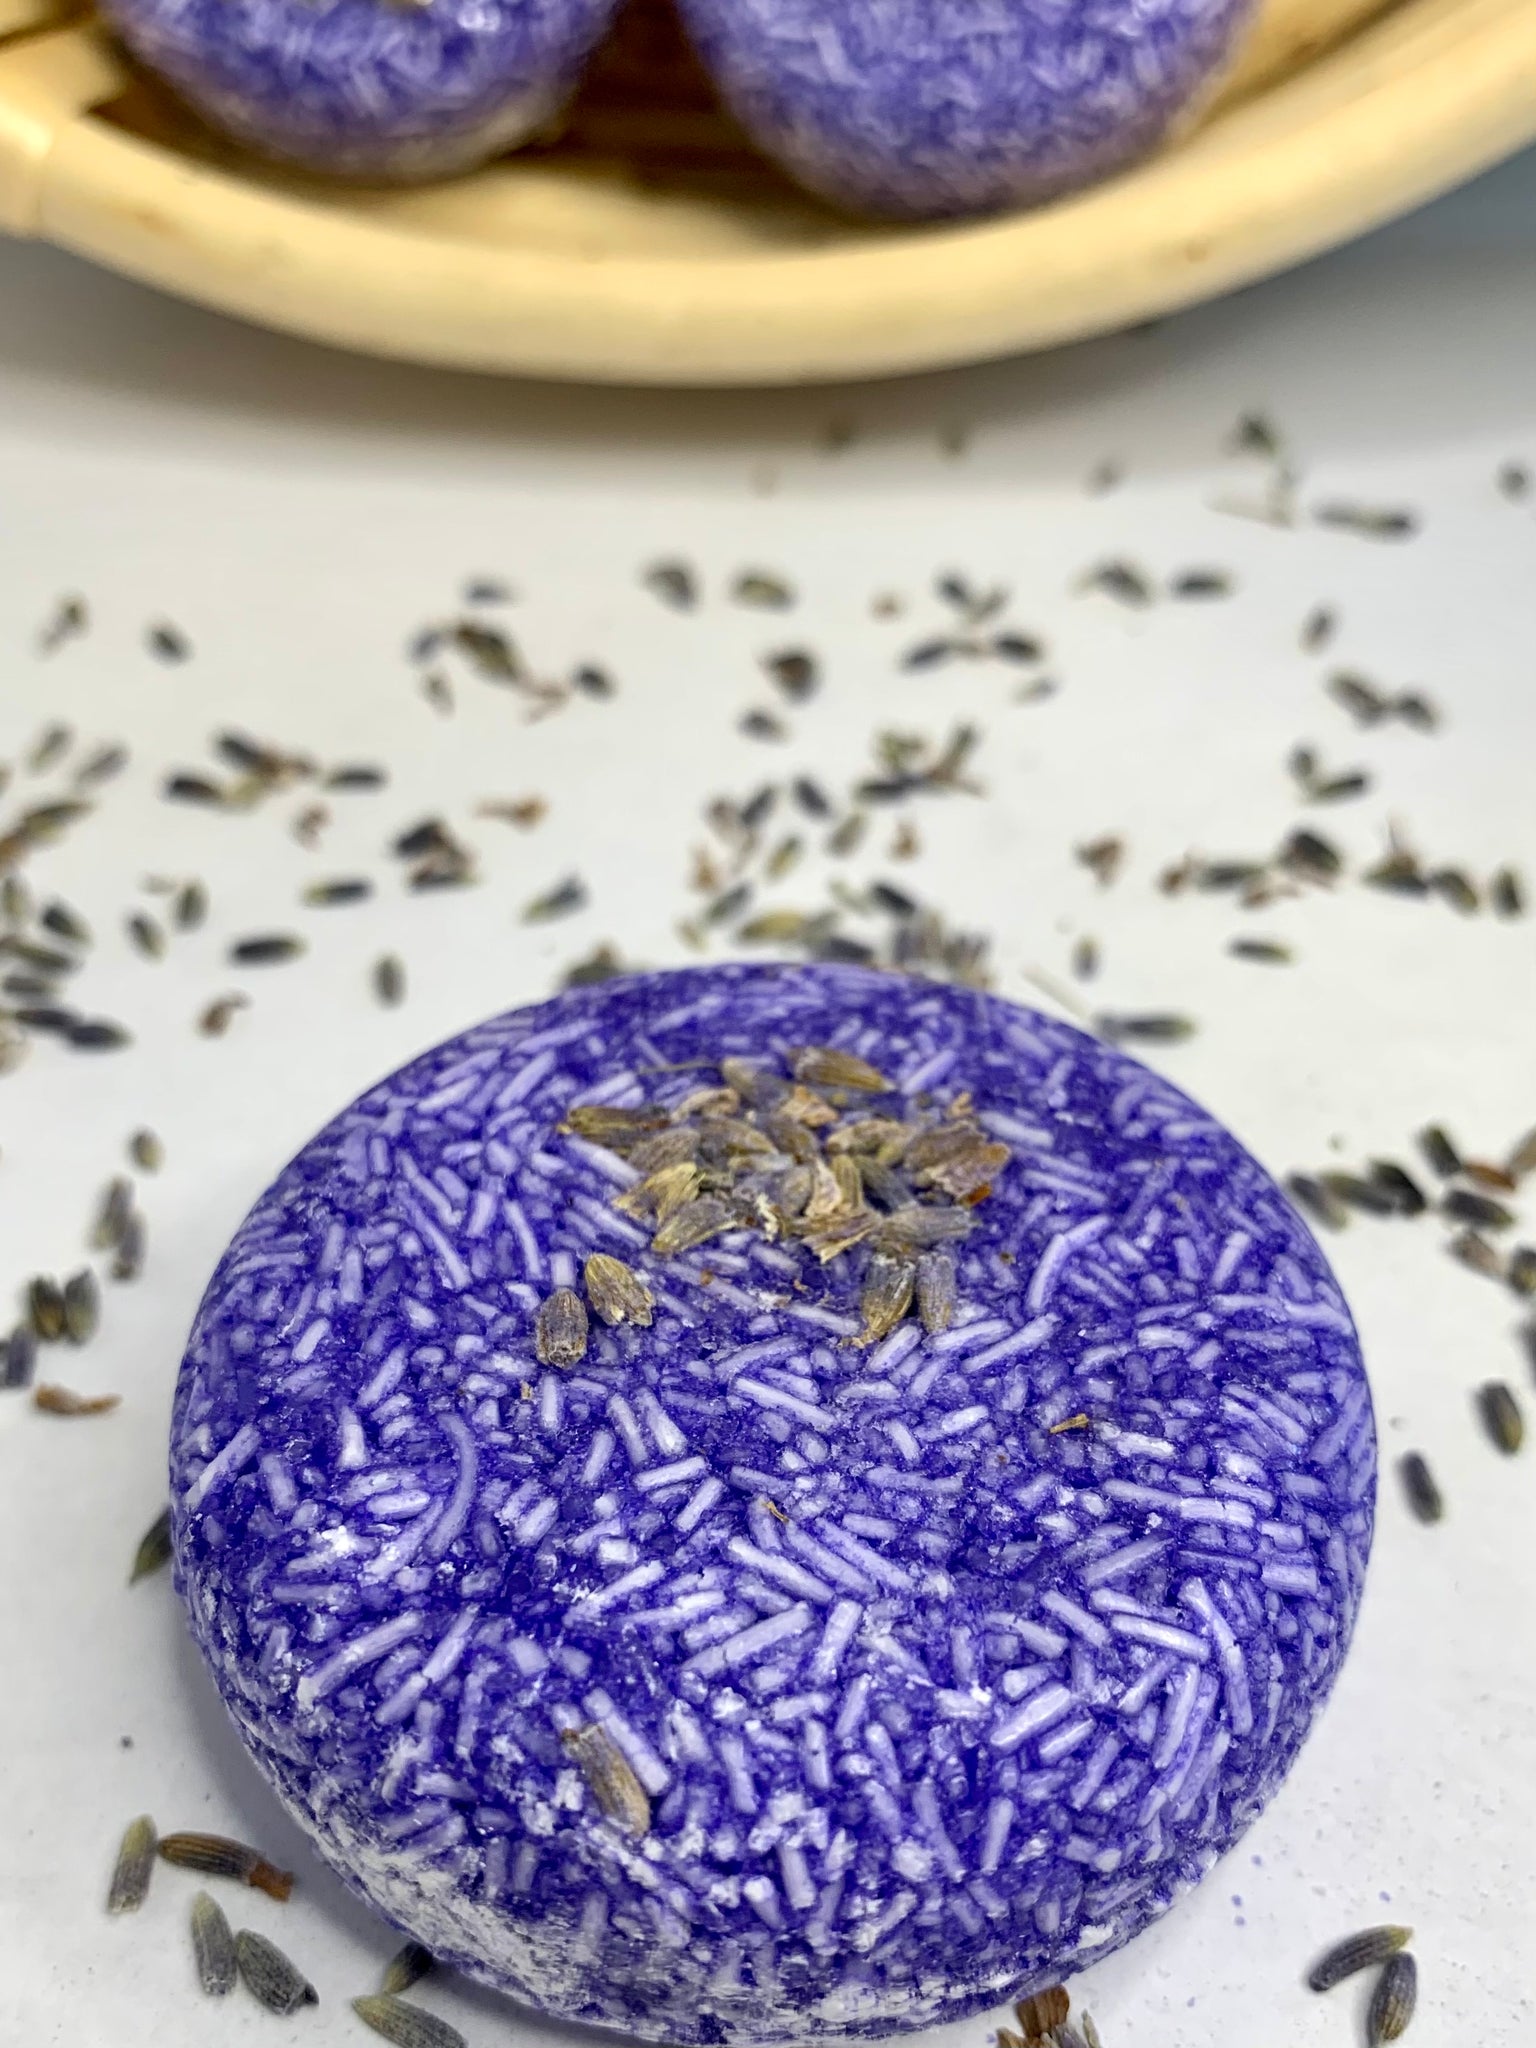 Lavender Shampoo bar with lavender buds